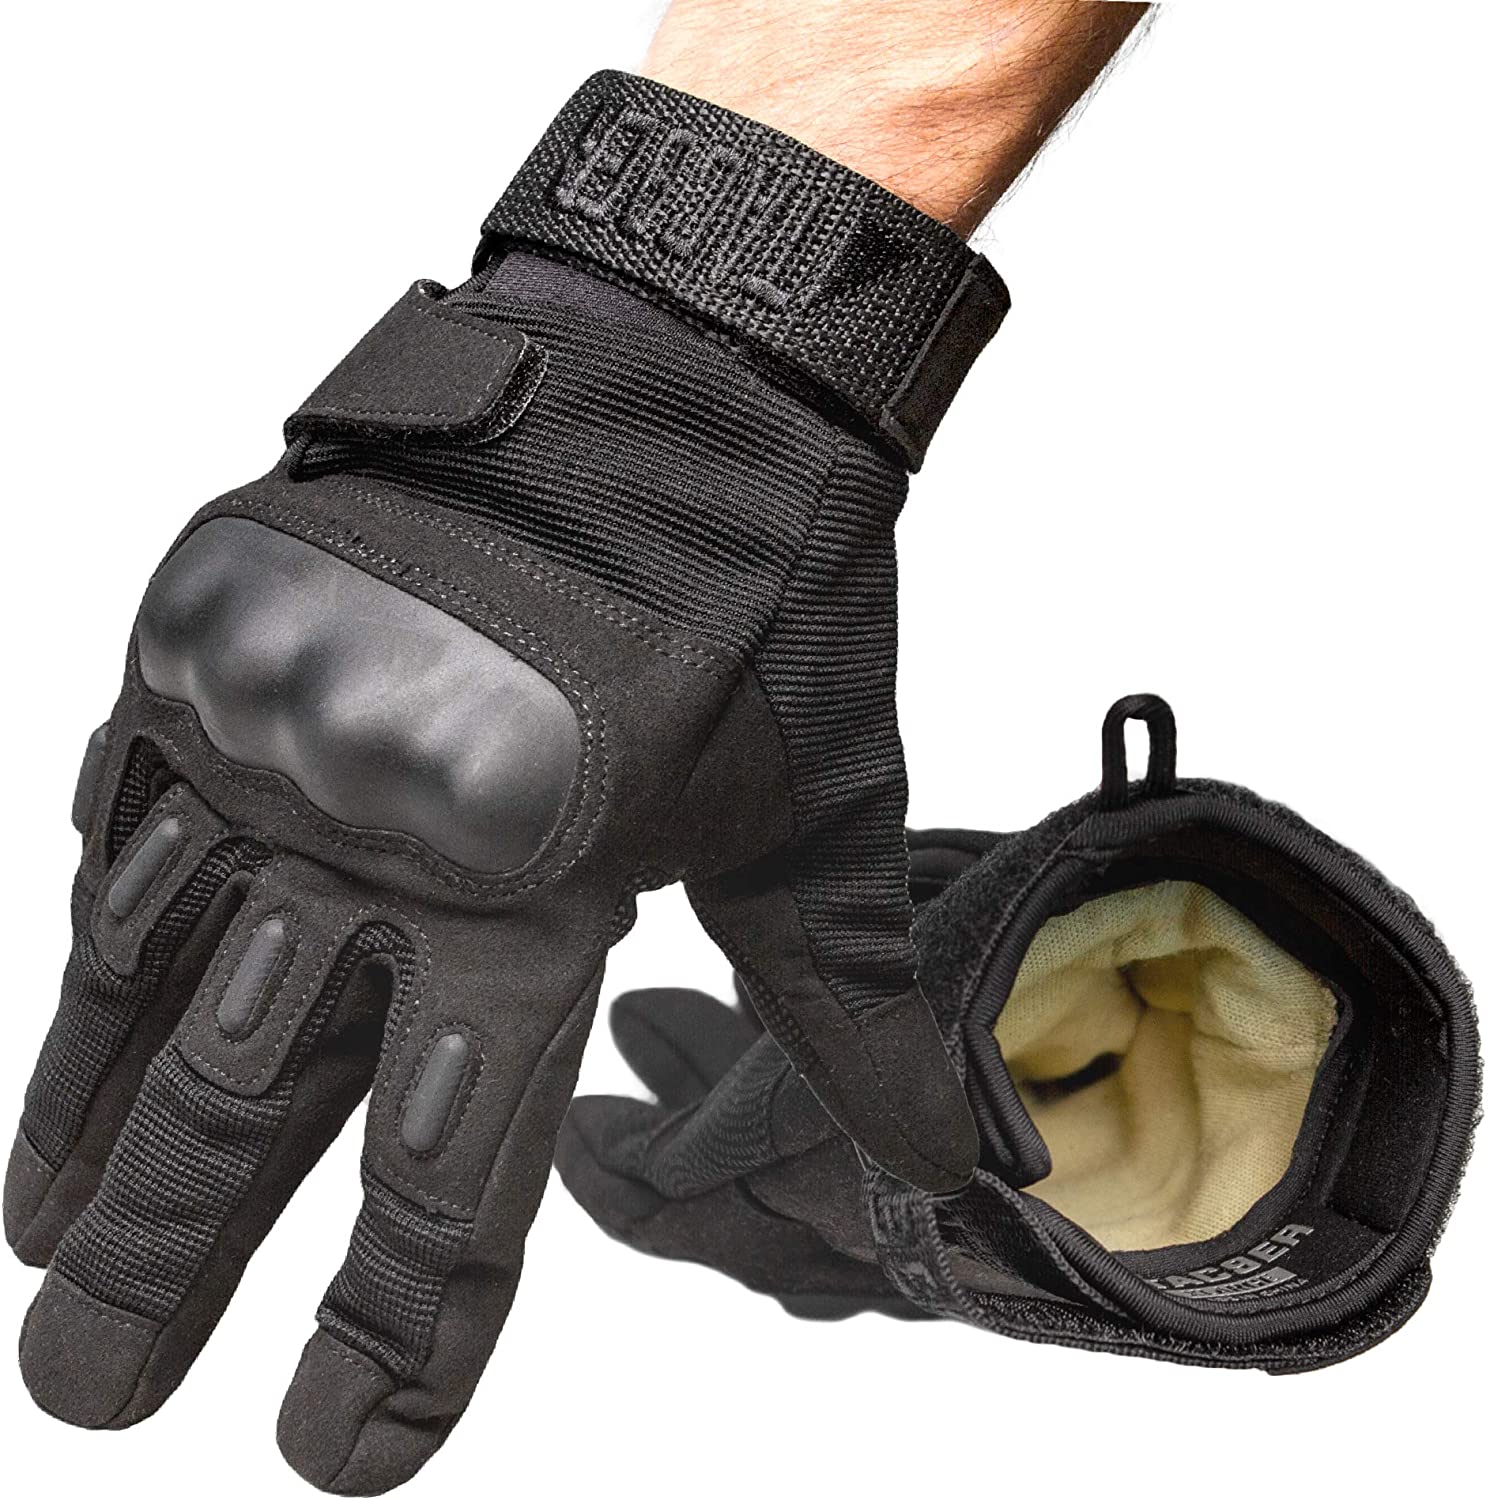 YSK GLOVE1: Full Finger / Half Finger Tactical Gloves (Climbing / Hiking / Hunting) - YSK (You Should Know) Safety